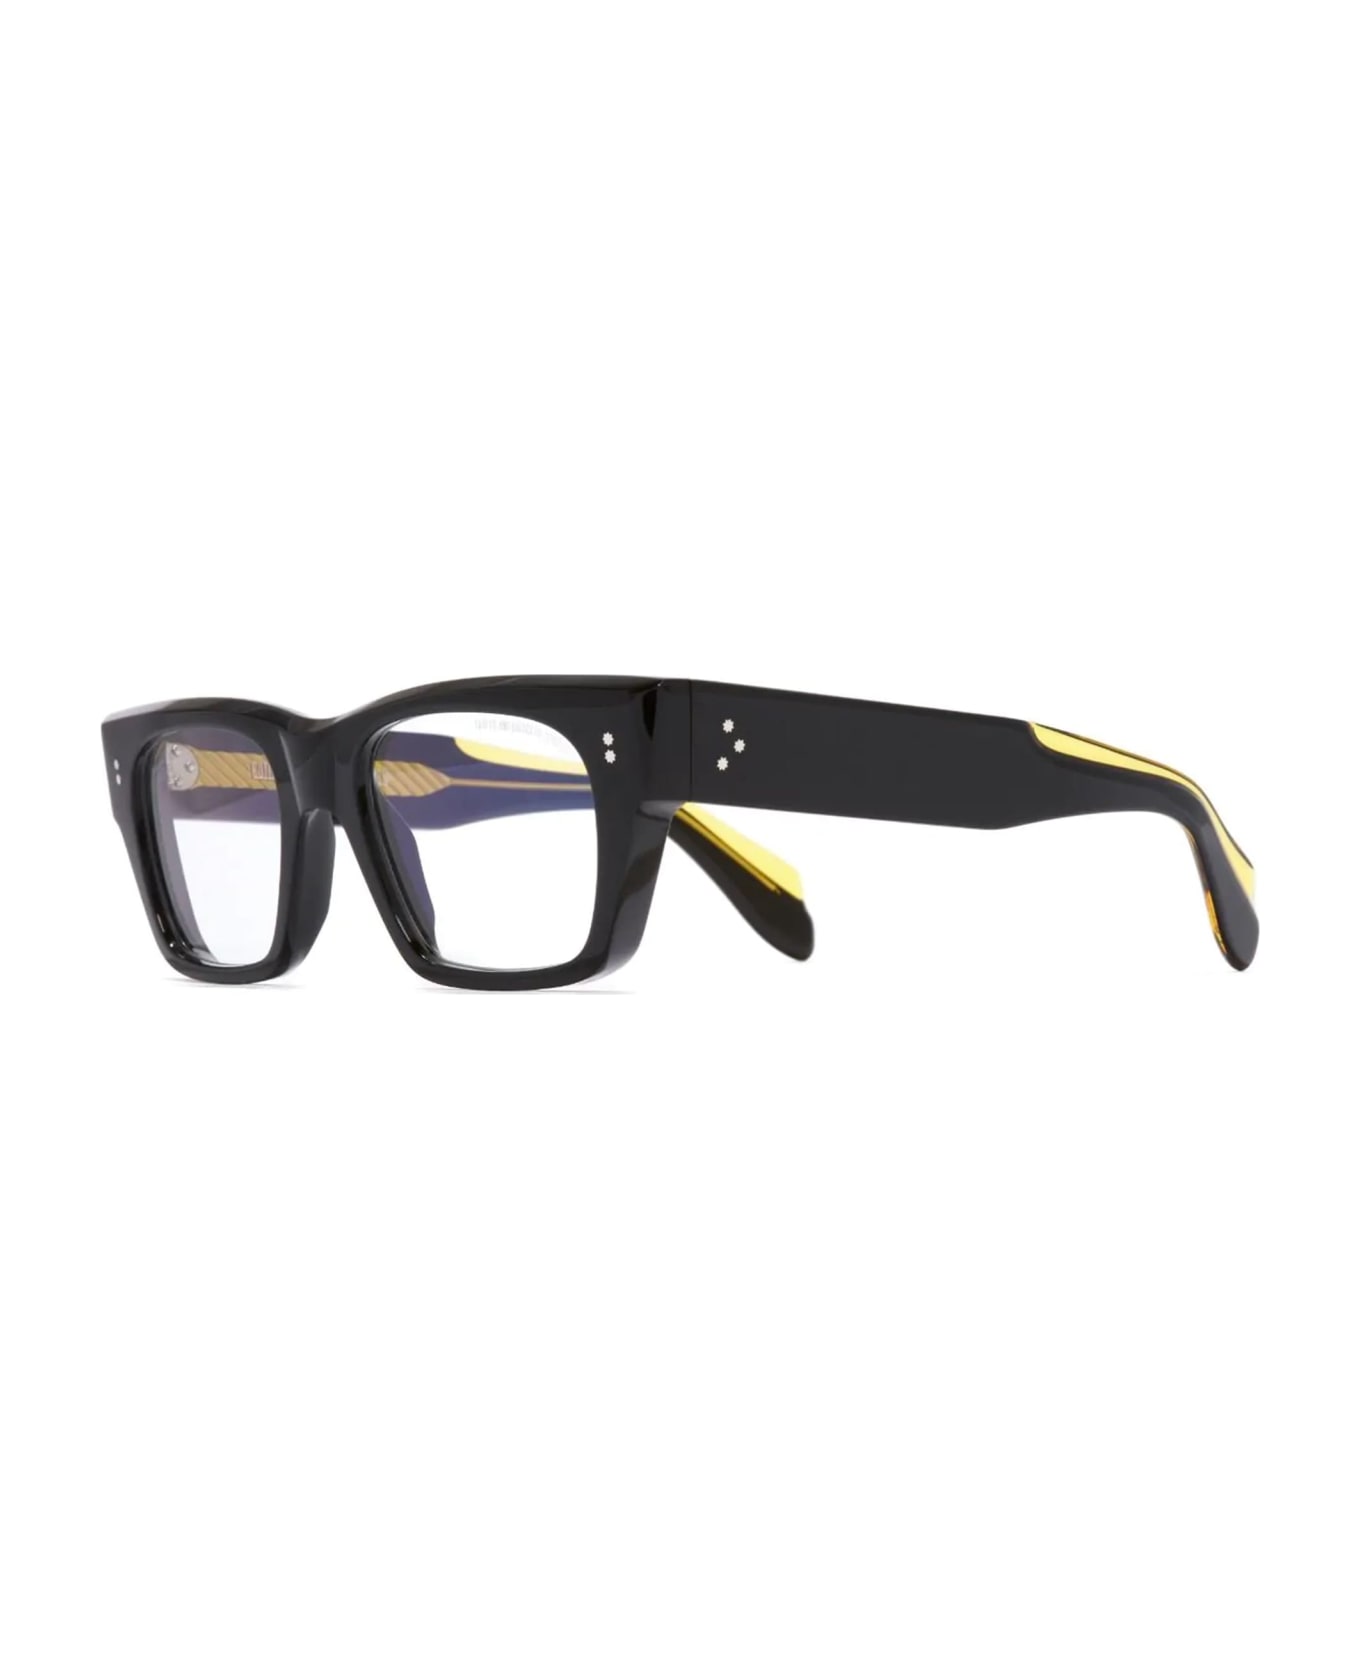 Cutler and Gross 9690 / Black Rx Glasses - Black